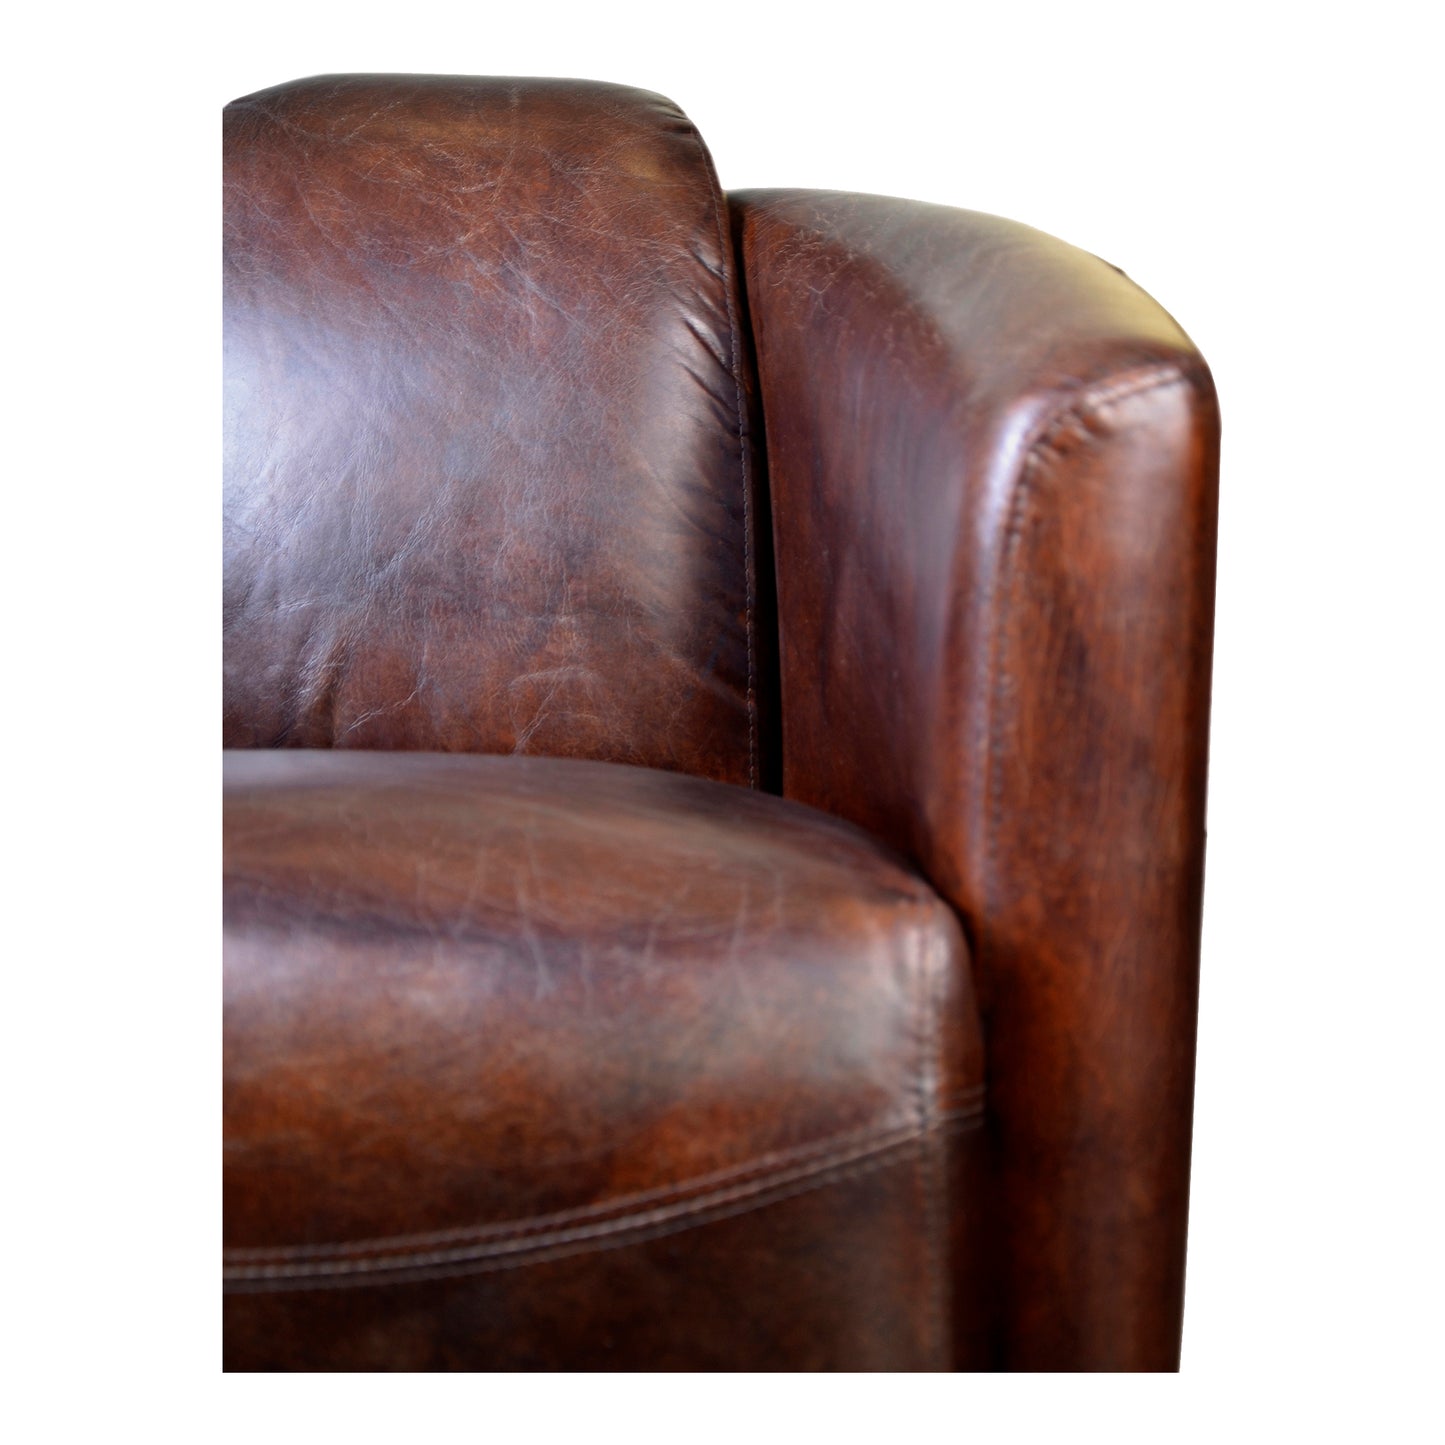 Salzburg Club Chair Dark Brown Leather